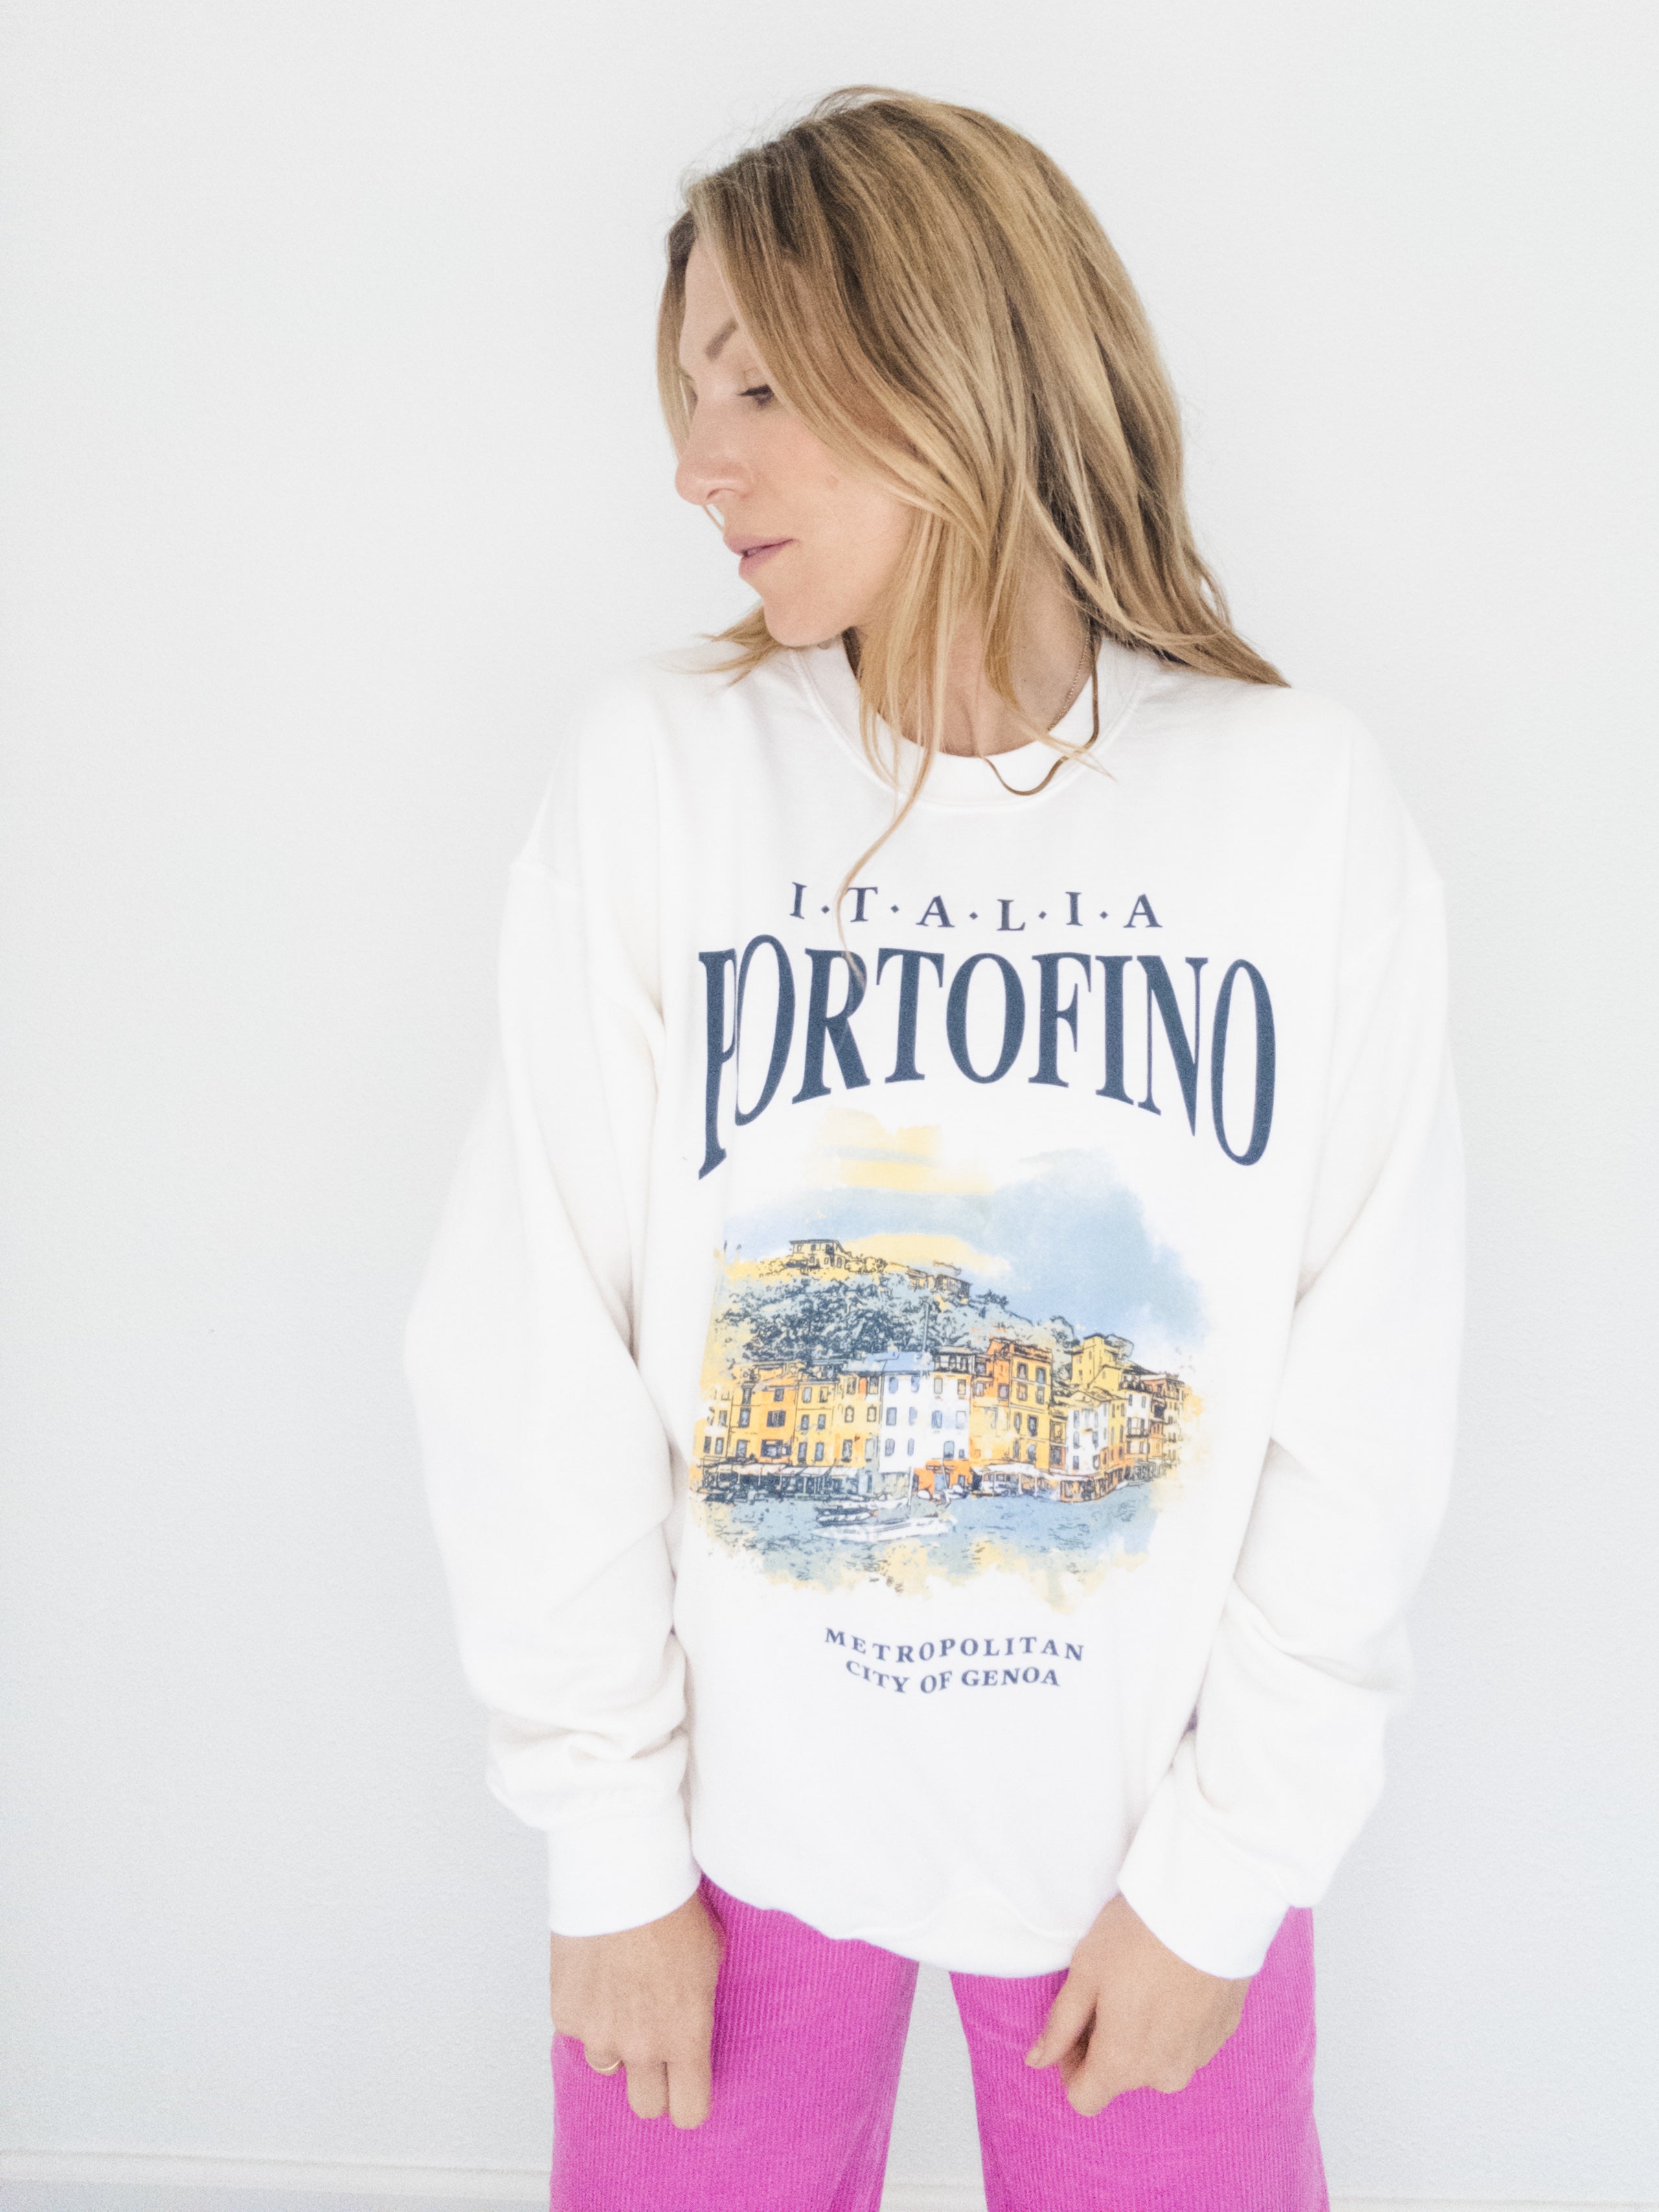 Portofino Graphic Sweatshirt